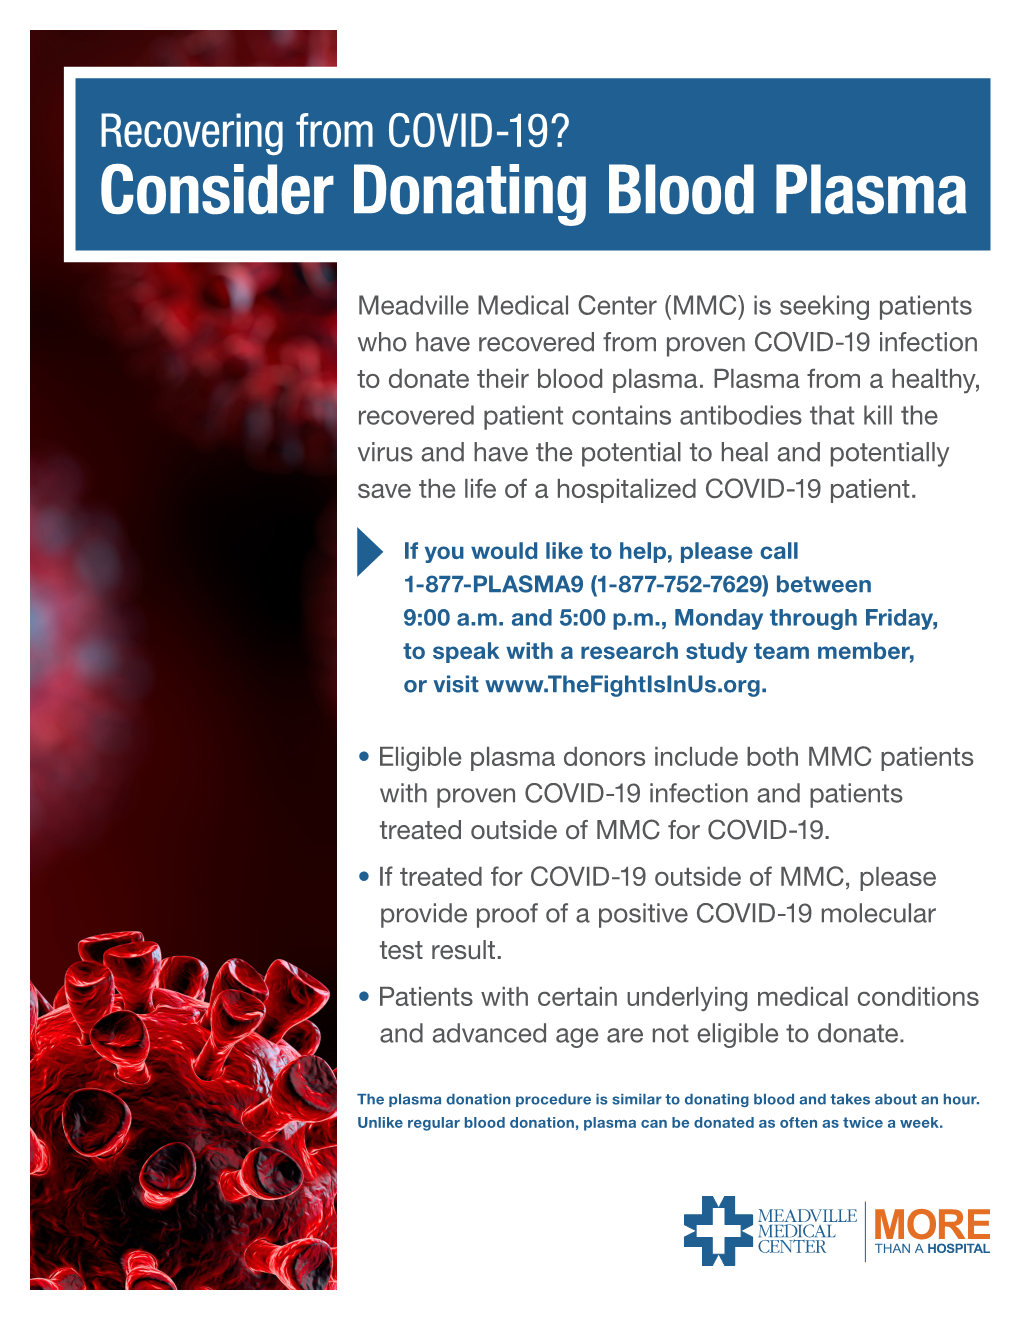 Consider Donating Blood Plasma